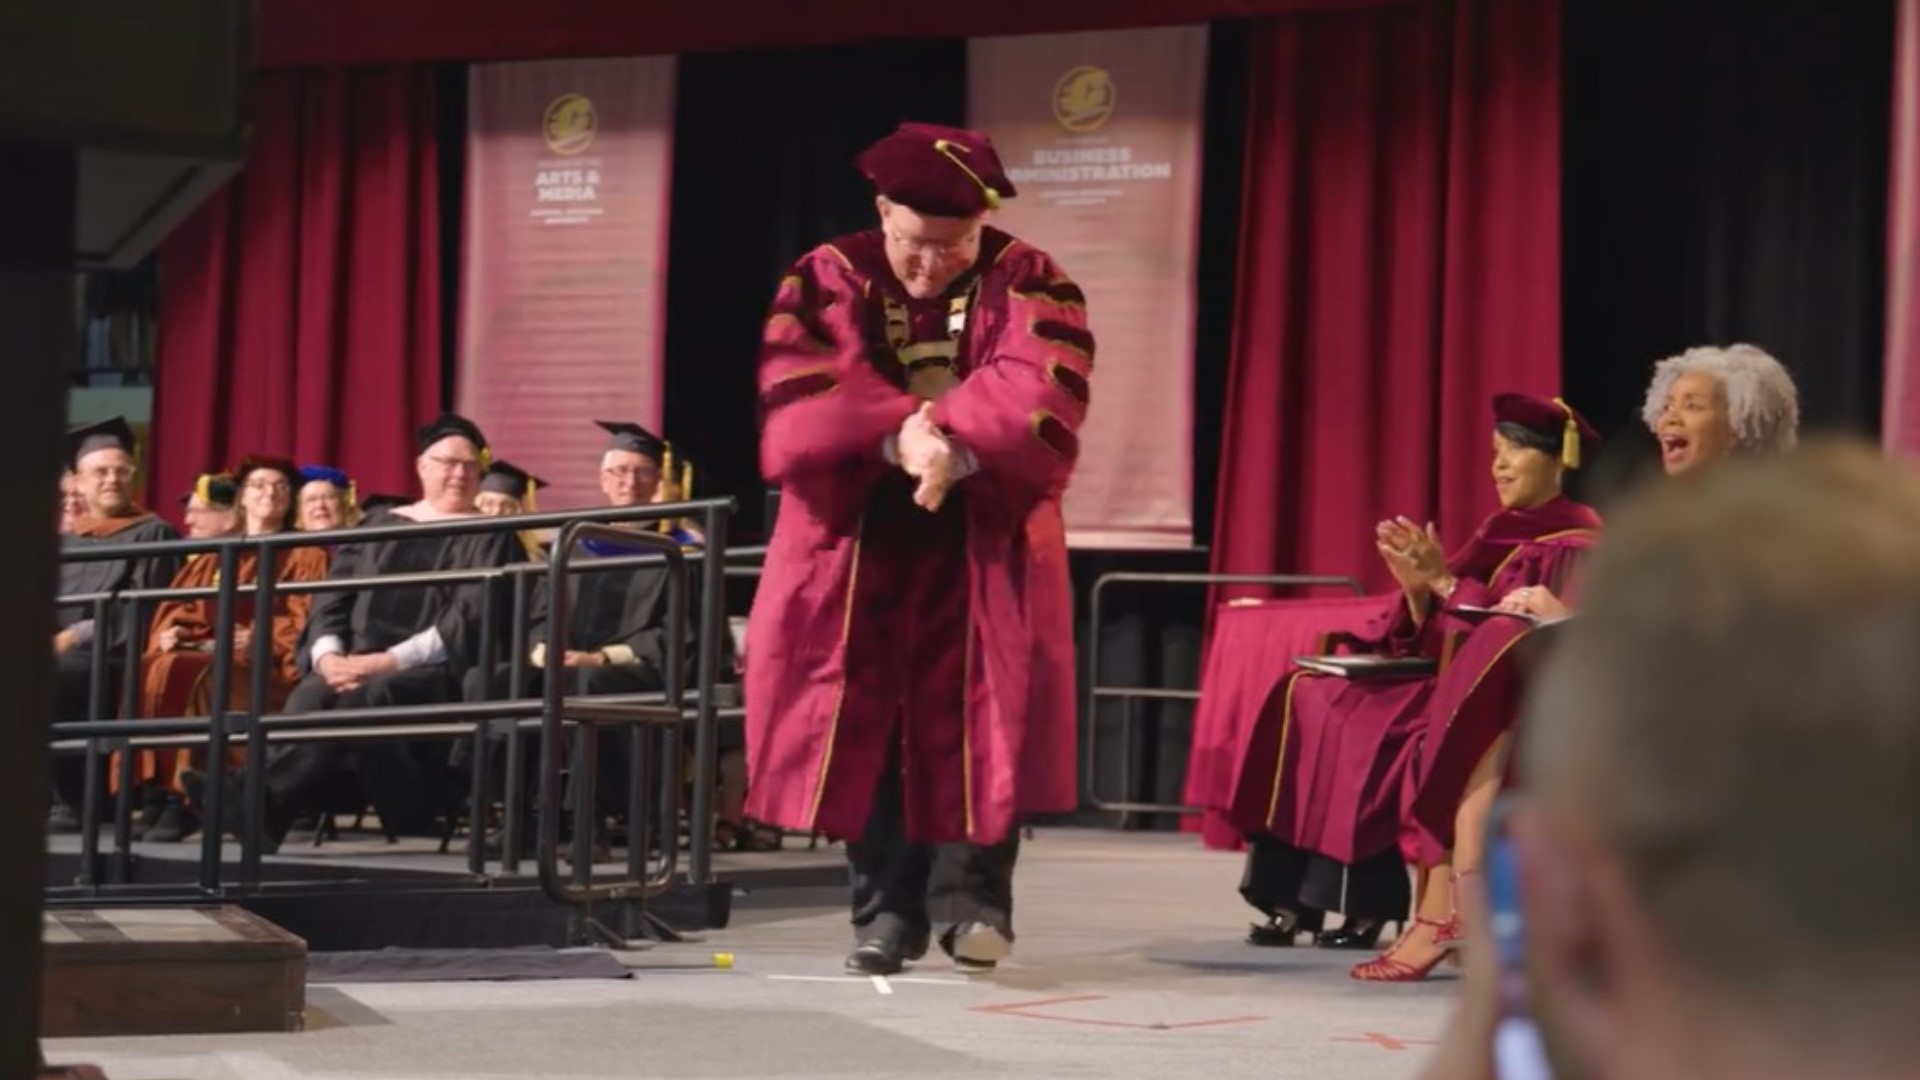 CMU President Bob Davies "Hitting the Griddy" at graduation. Video credit goes to Central Michigan University.